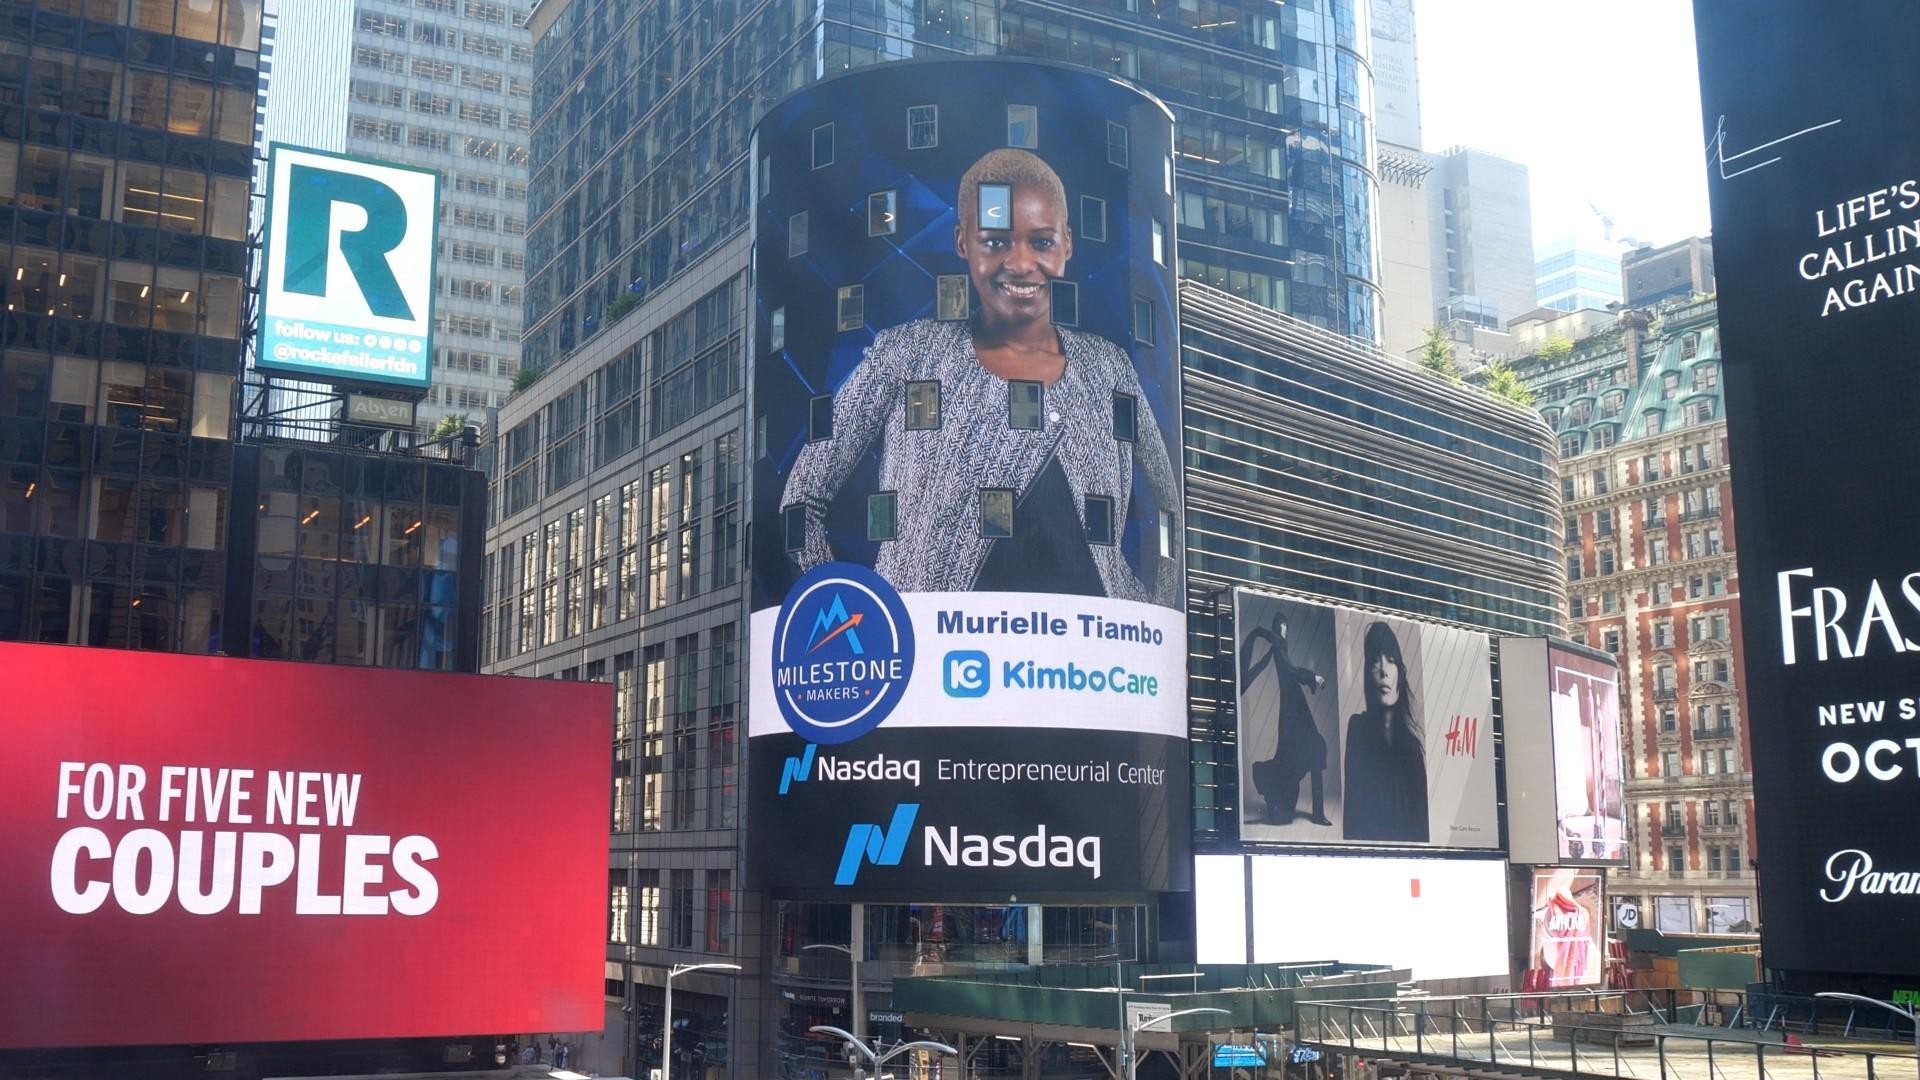 The Western Switzerland-based company KimboCare hits Nasdaq’s billboard in Times Square, New York.